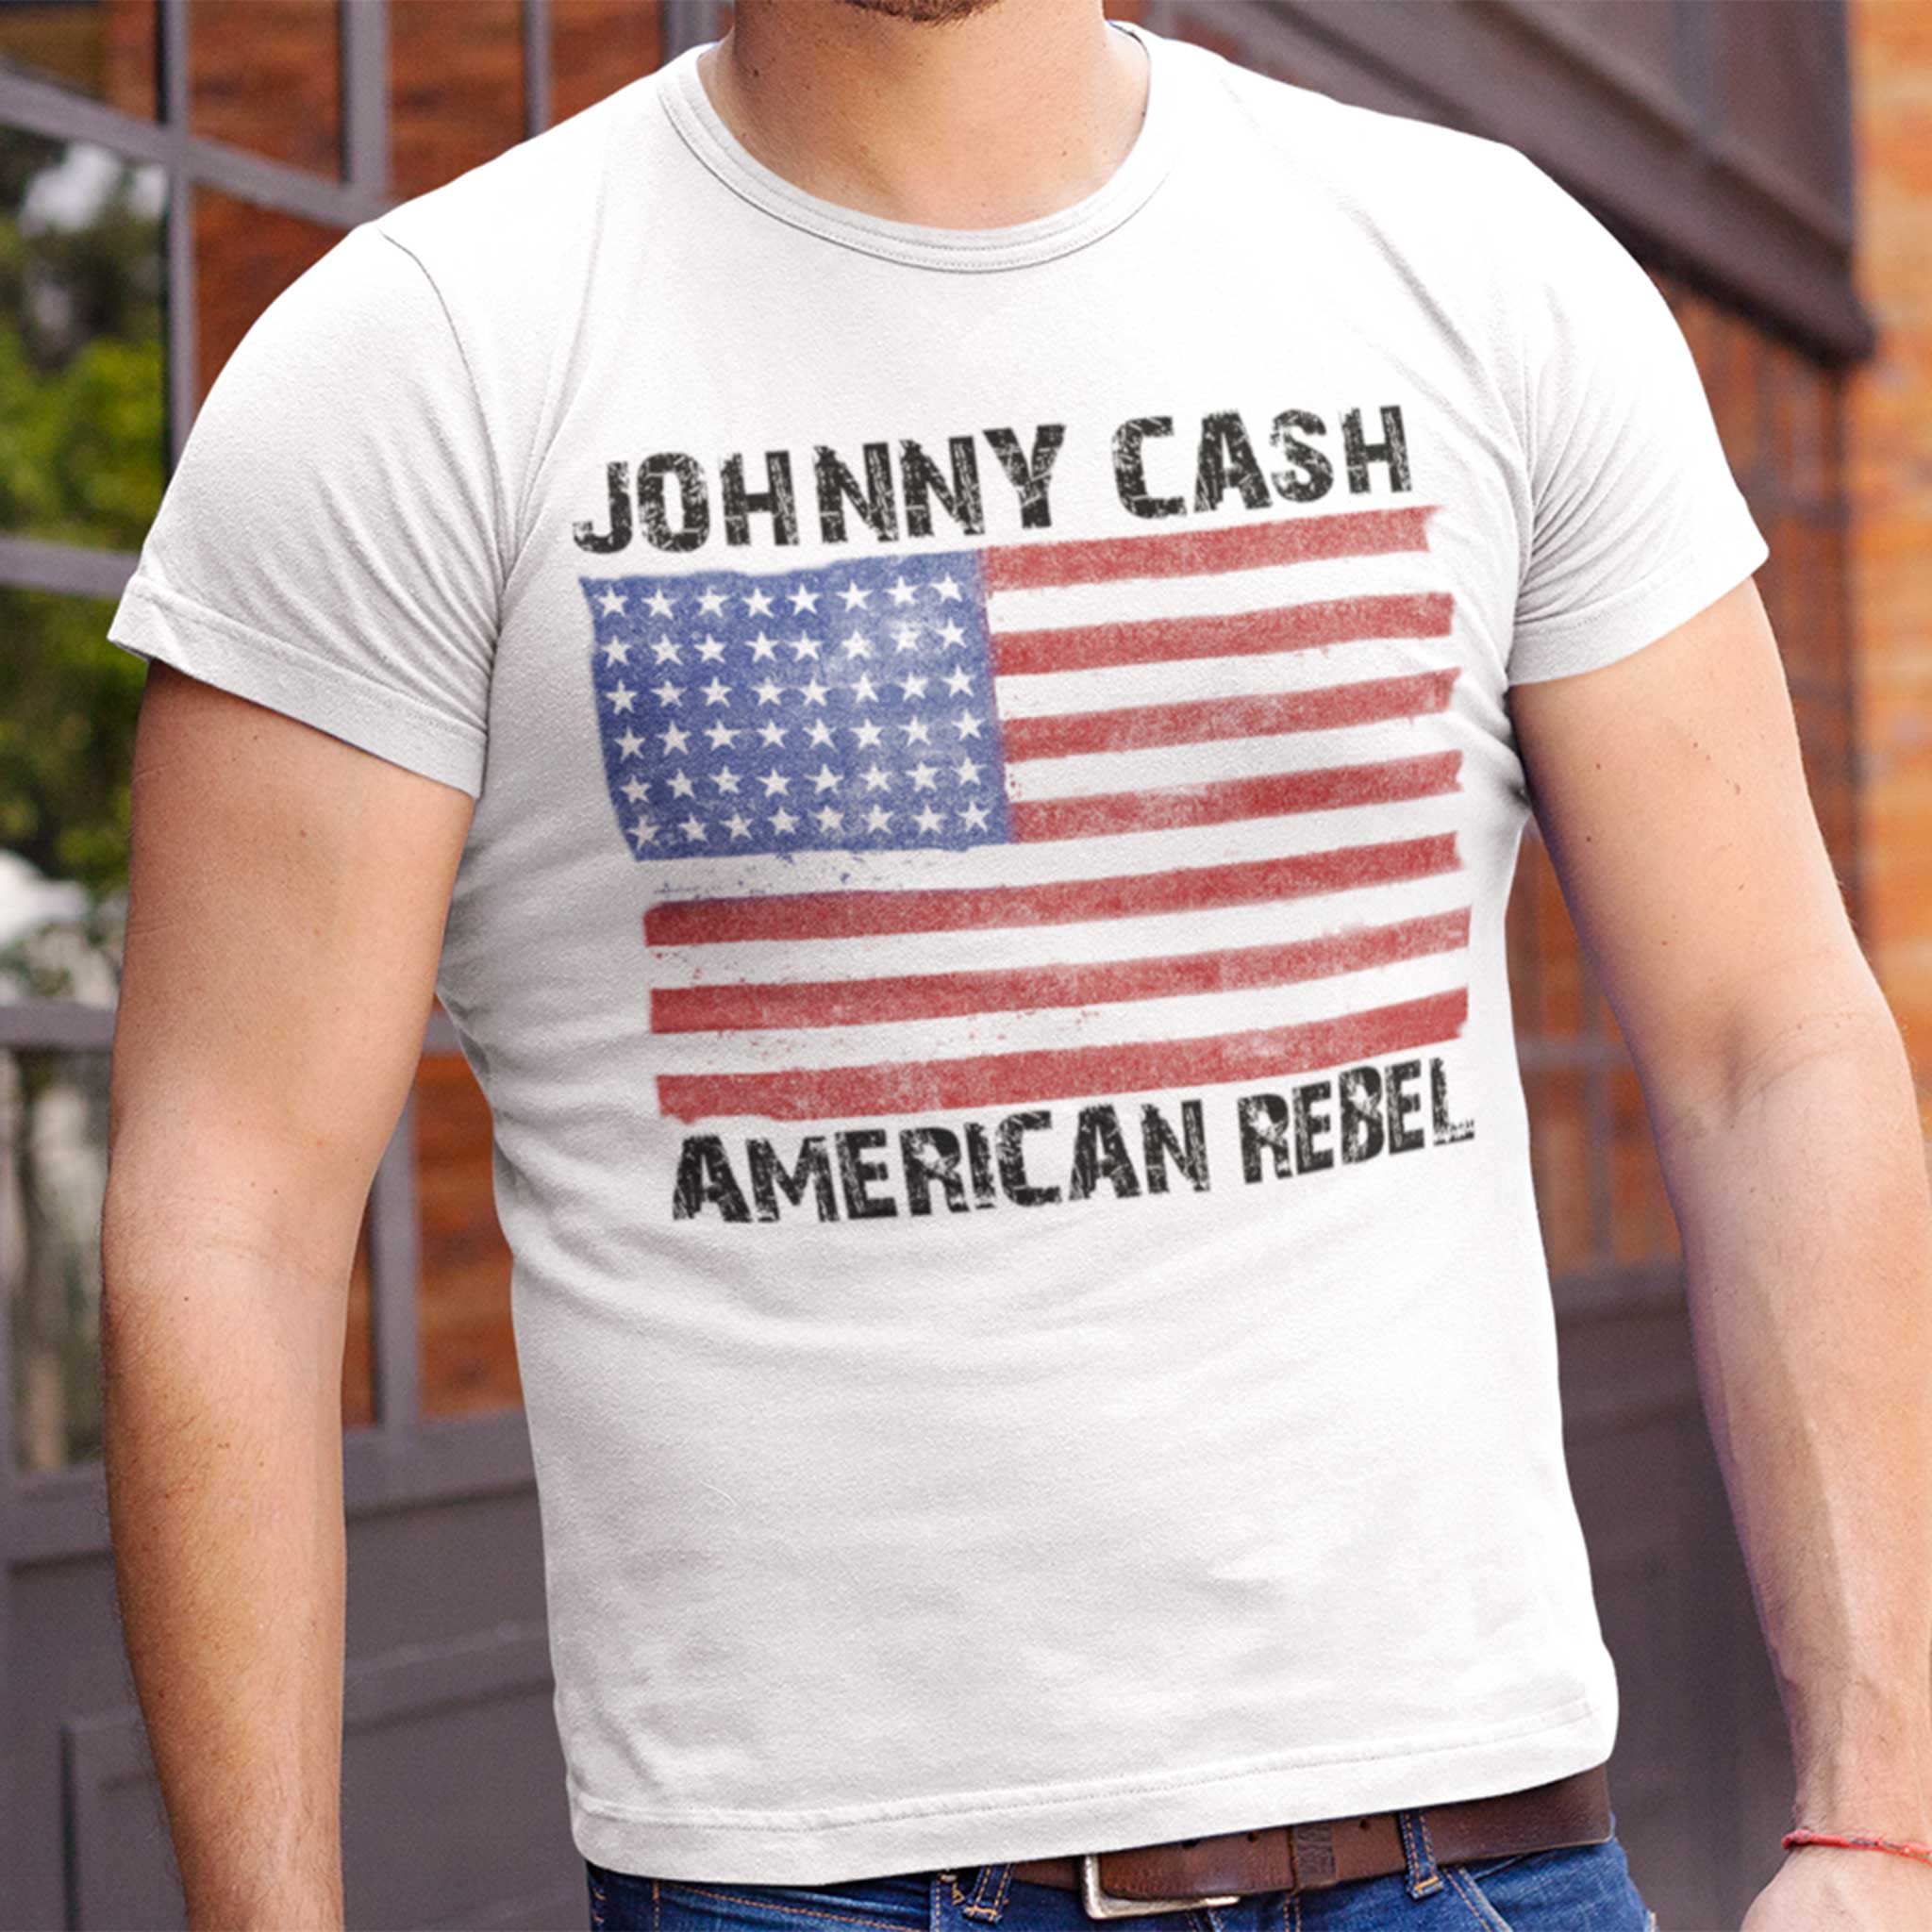 american flag on t shirt